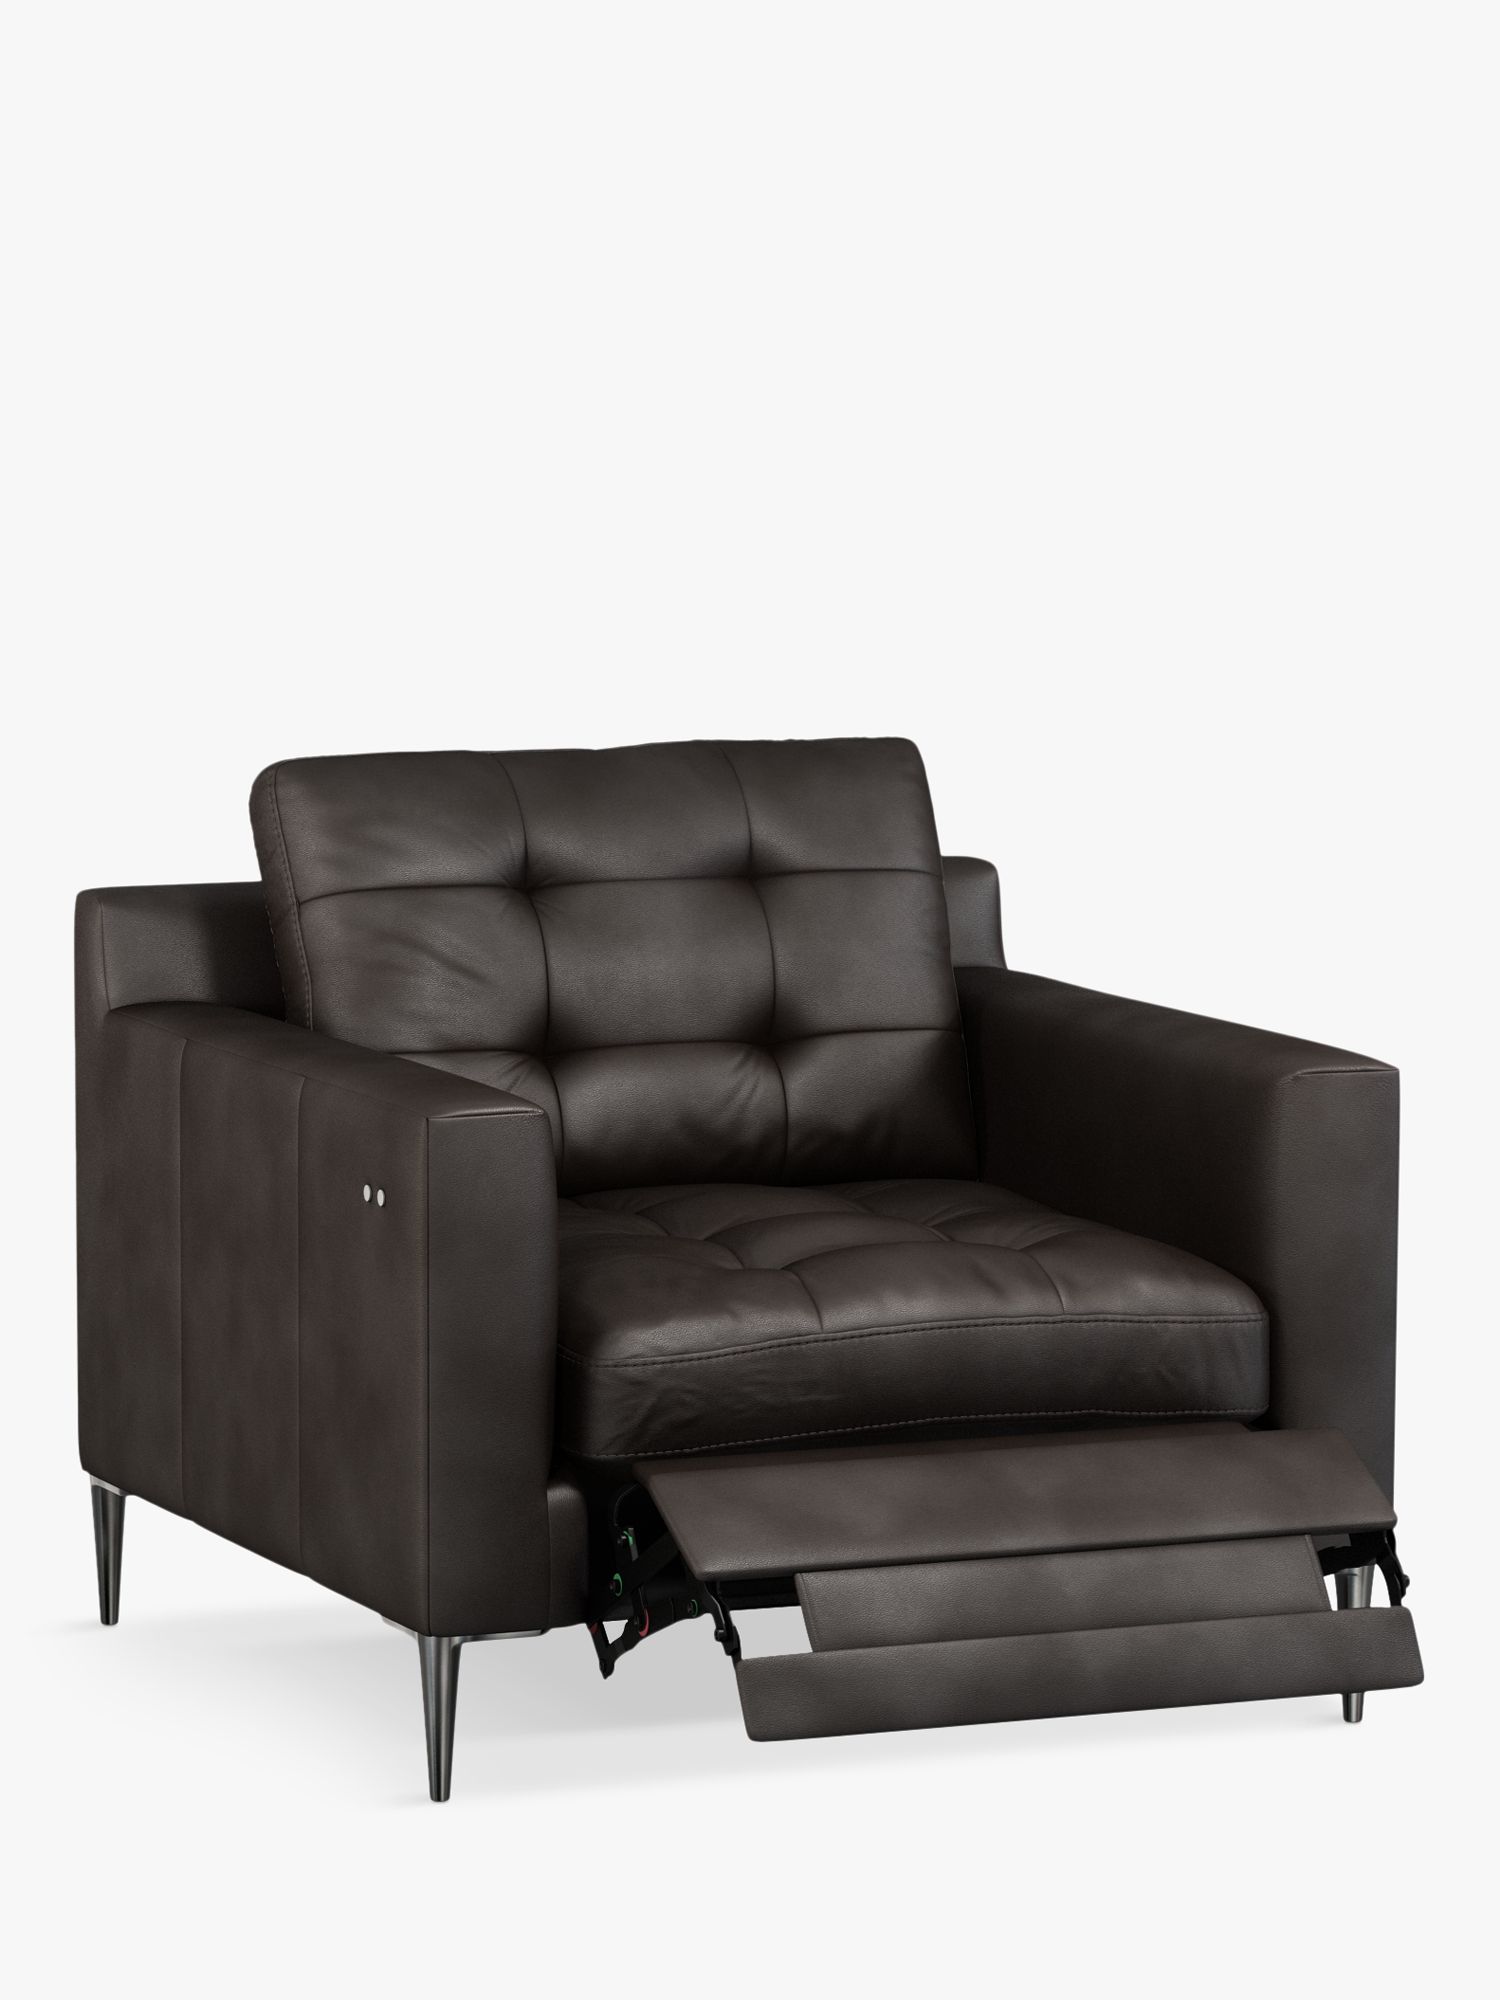 Draper Range, John Lewis Draper Motion Leather Armchair with Footrest Mechanism, Metal Leg, Contempo Dark Chocolate